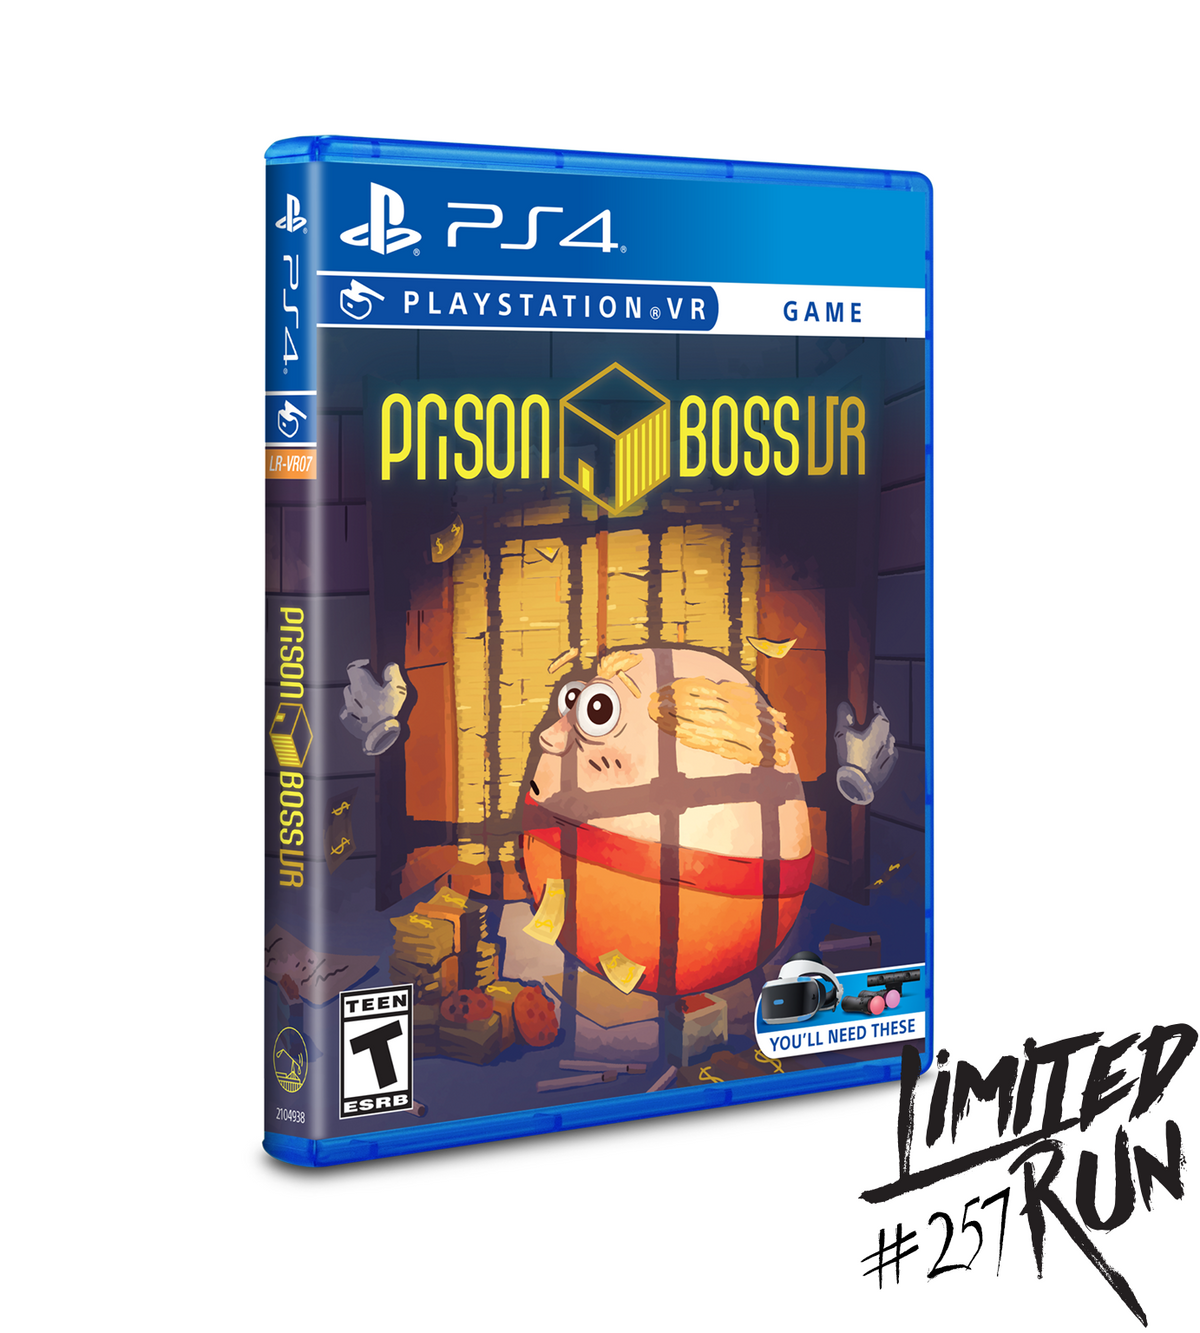 Limited Run #257: Boss (PS4) – Limited Run Games